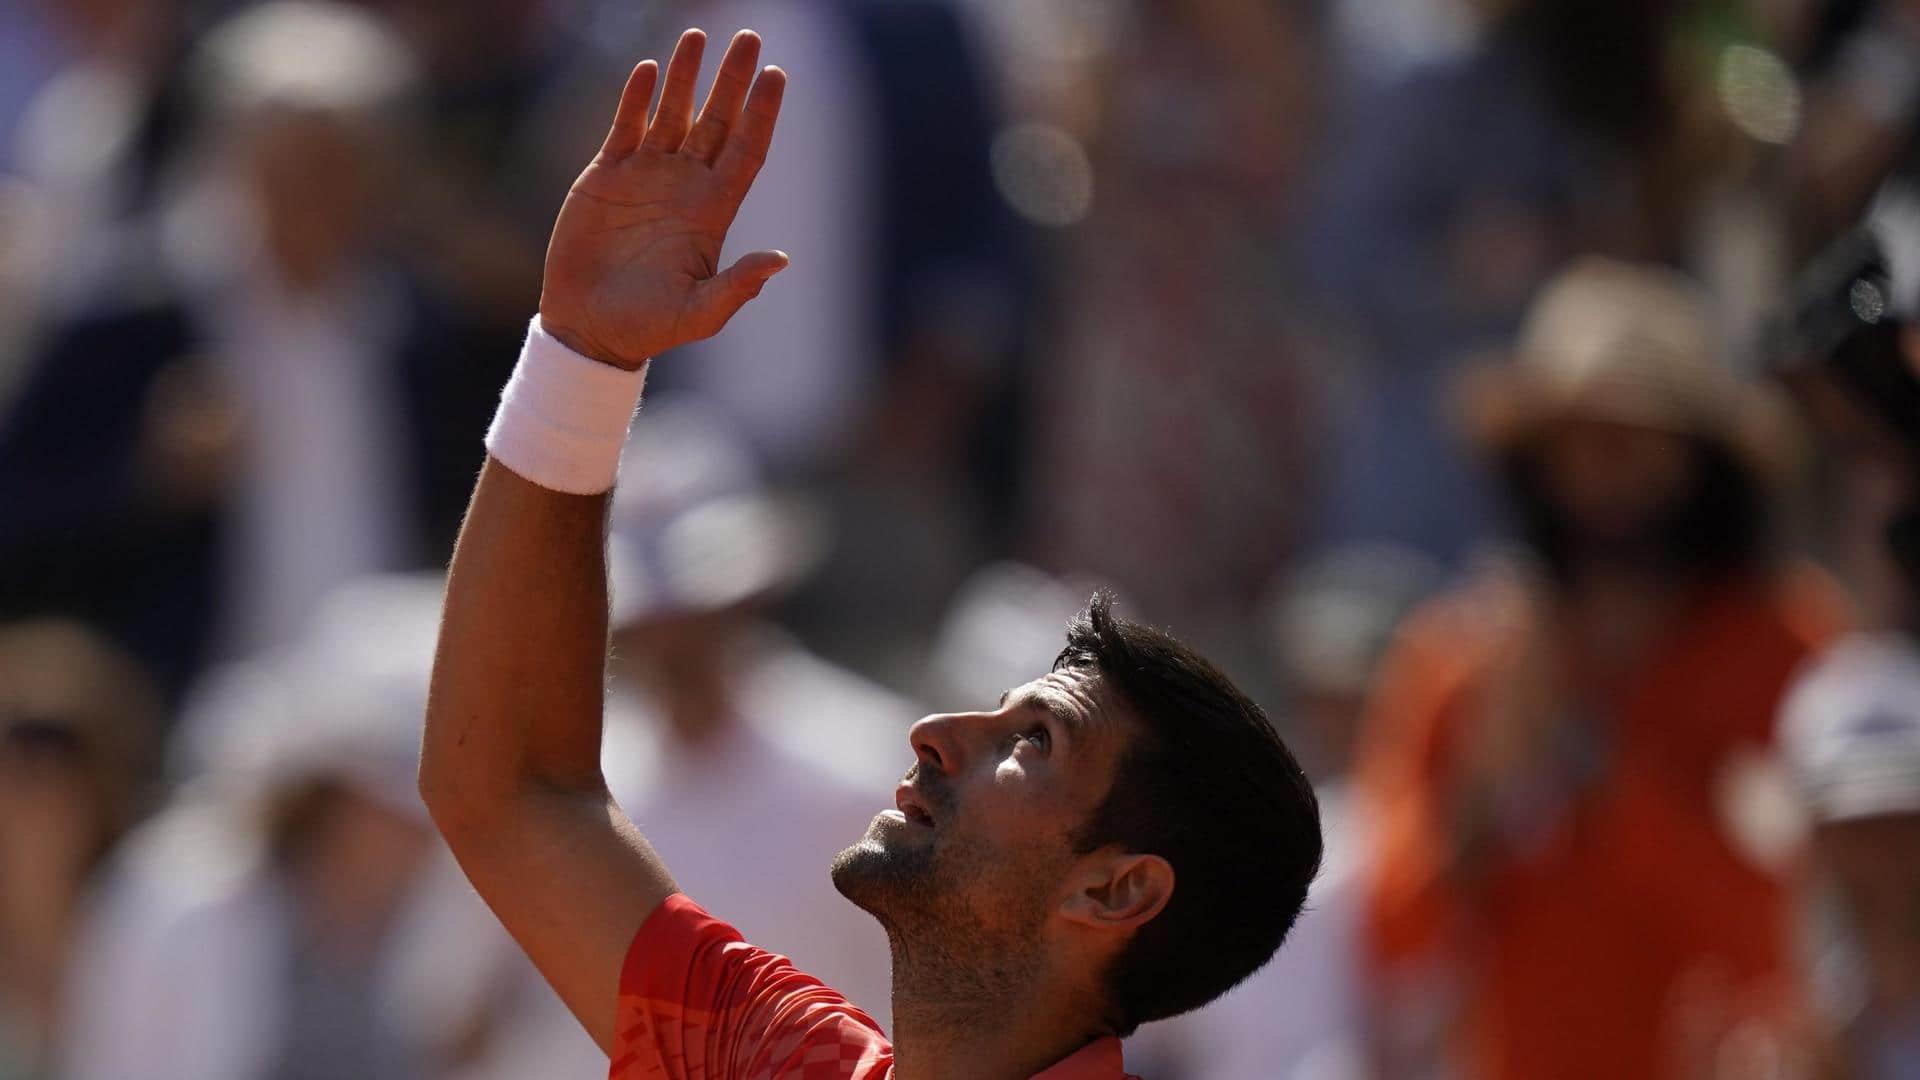 2023 French Open, Novak Djokovic reaches quarter-finals: Key stats